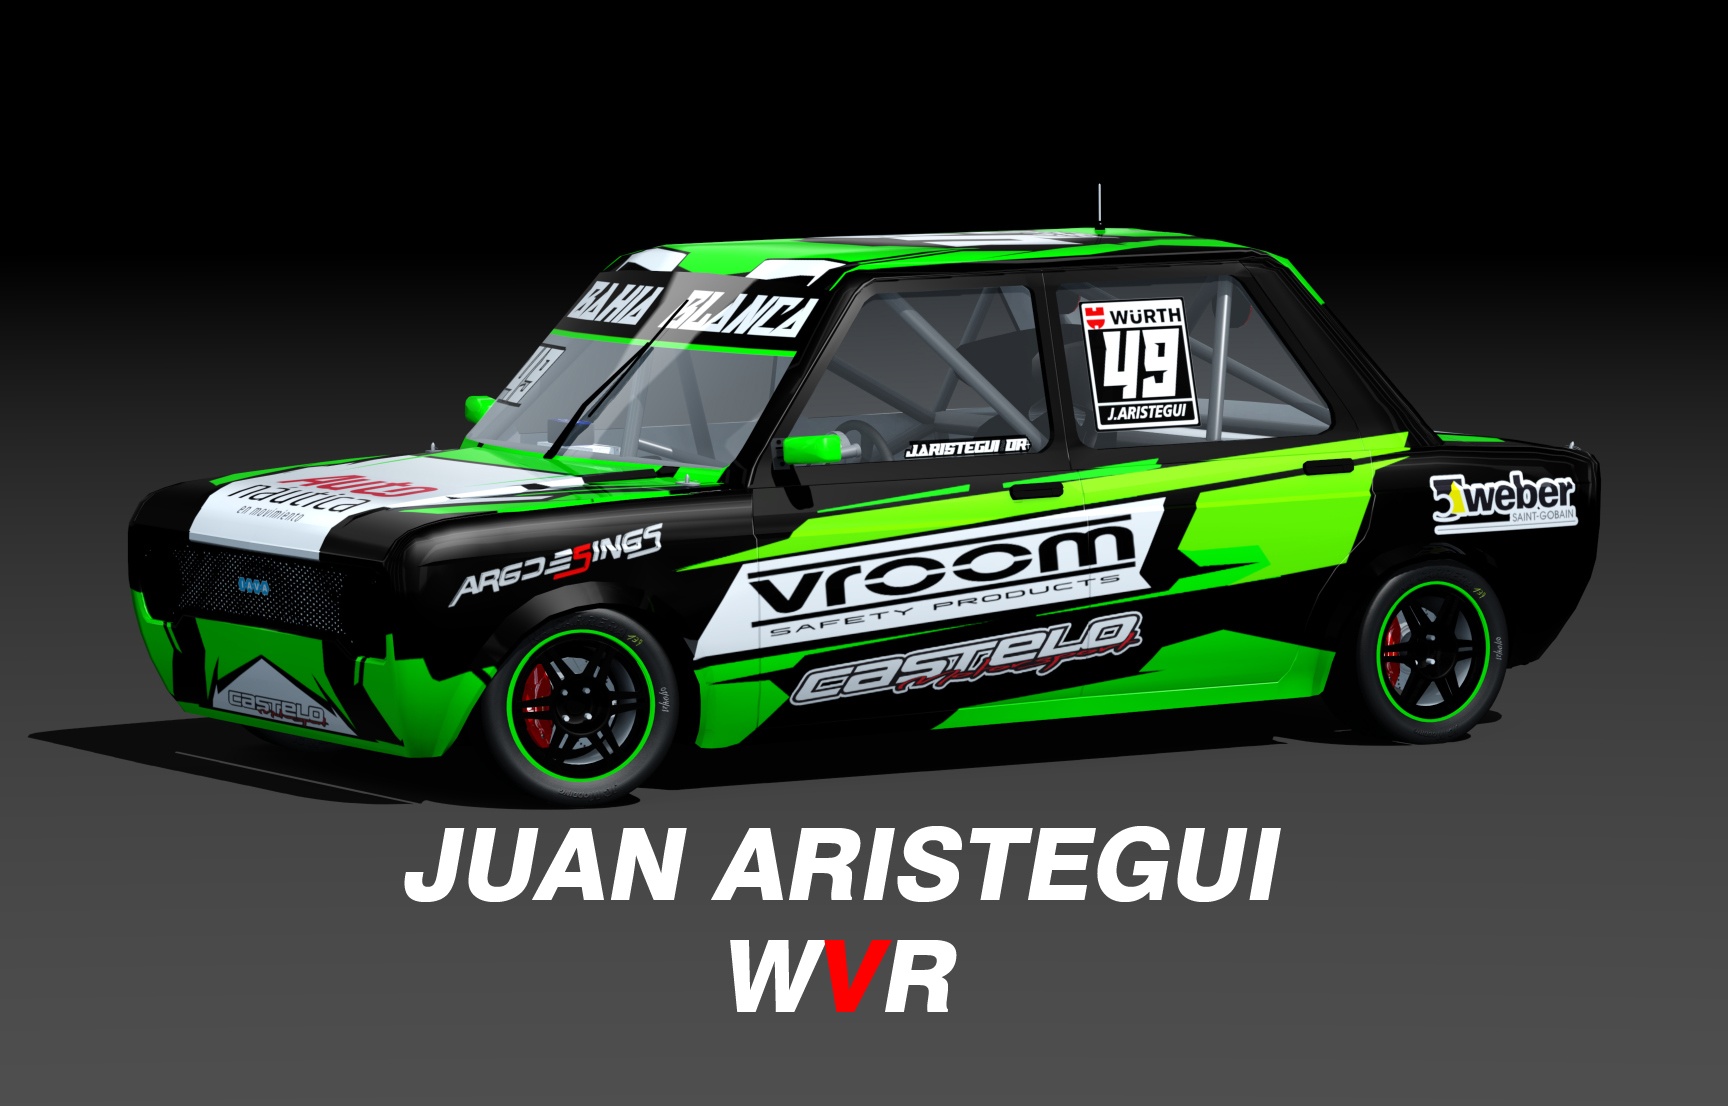 WVR Turismo 1.4 FIAT 128, skin juan aristegui